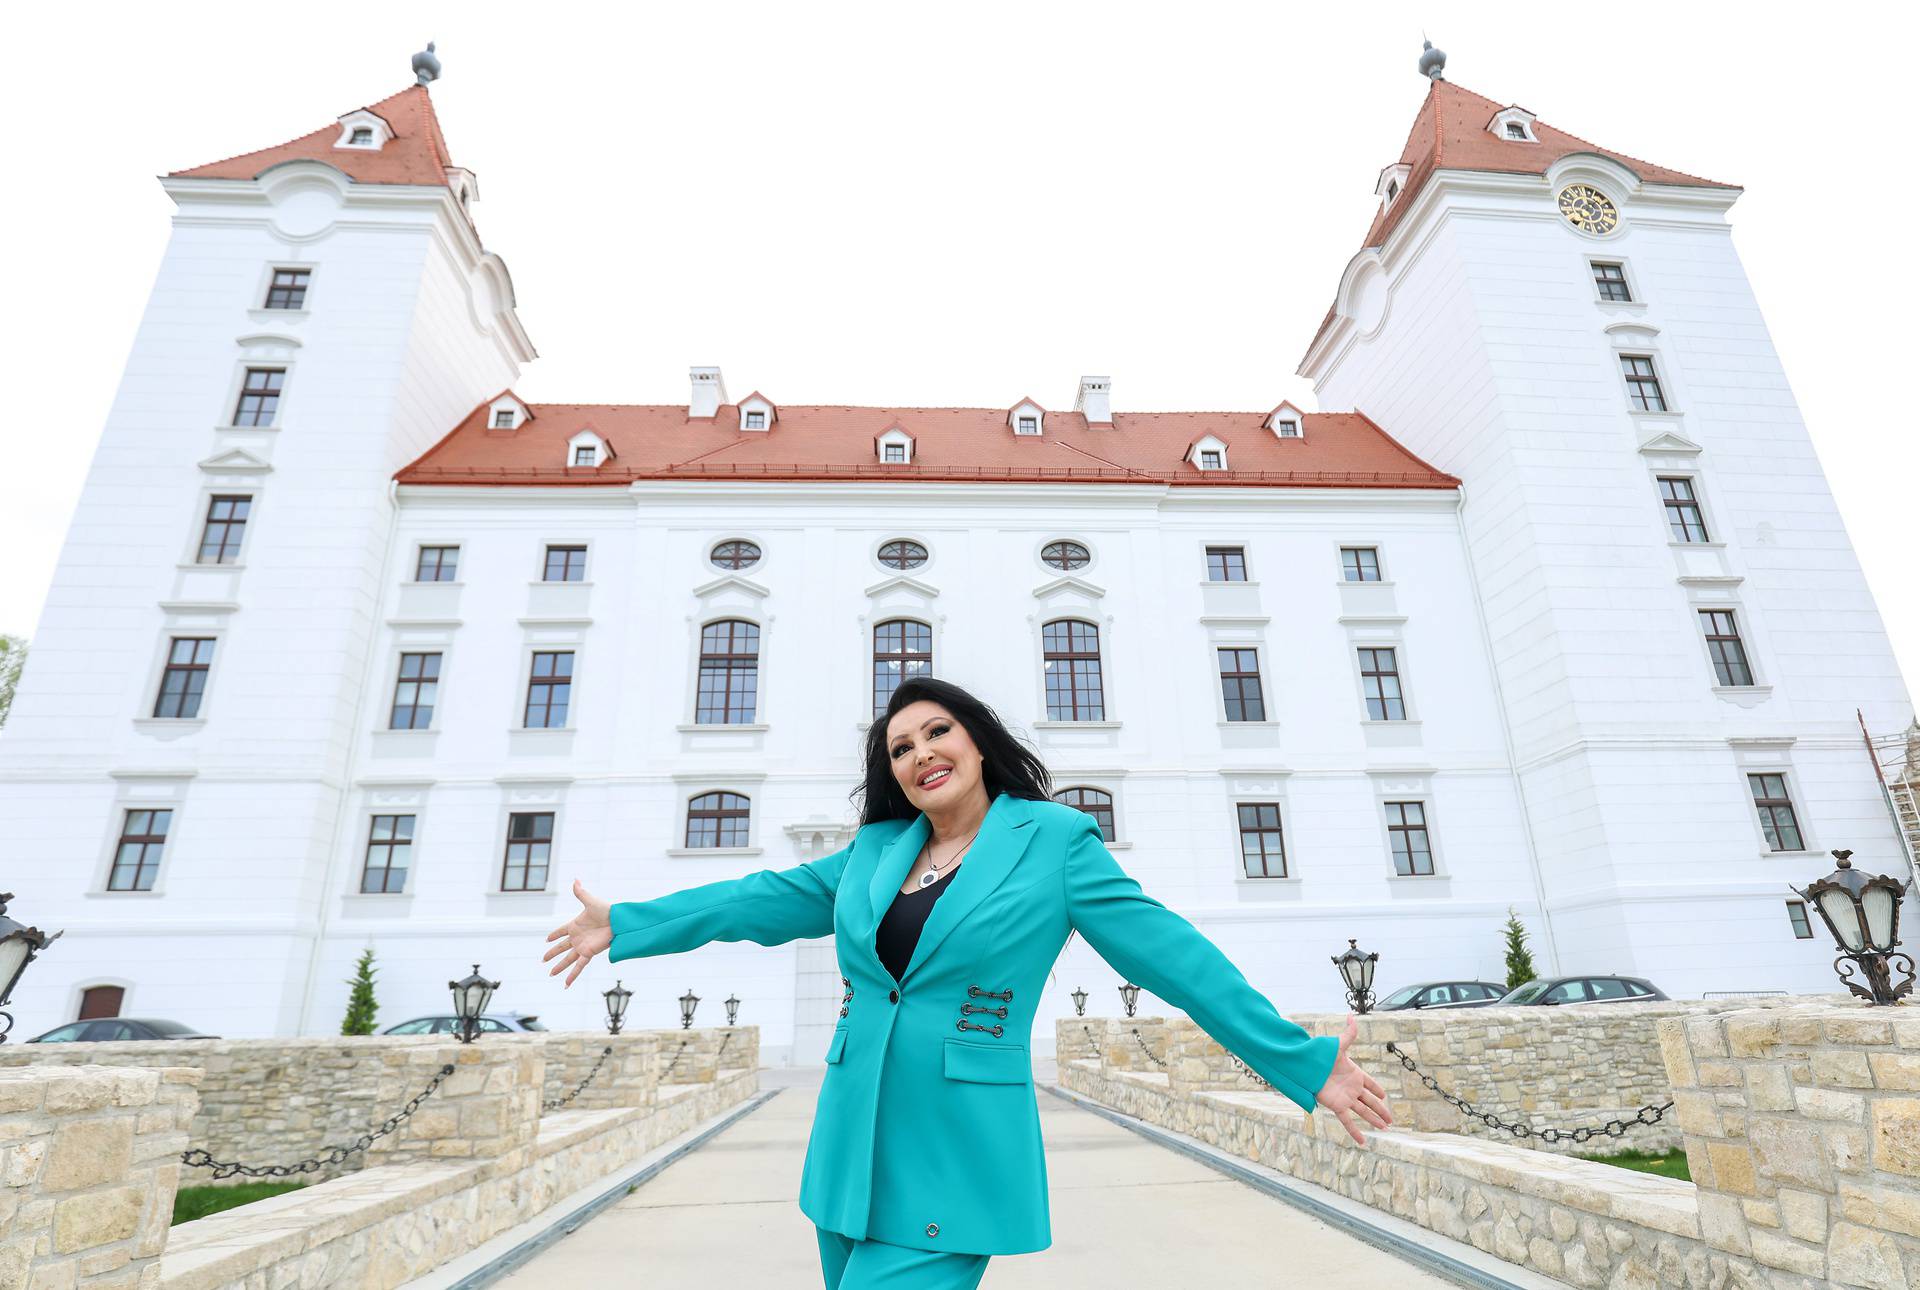 Ebenfurt: Pop folk pjevačica Dragana Mirković živi u svom dvorcu u malom austrijskom gradiću